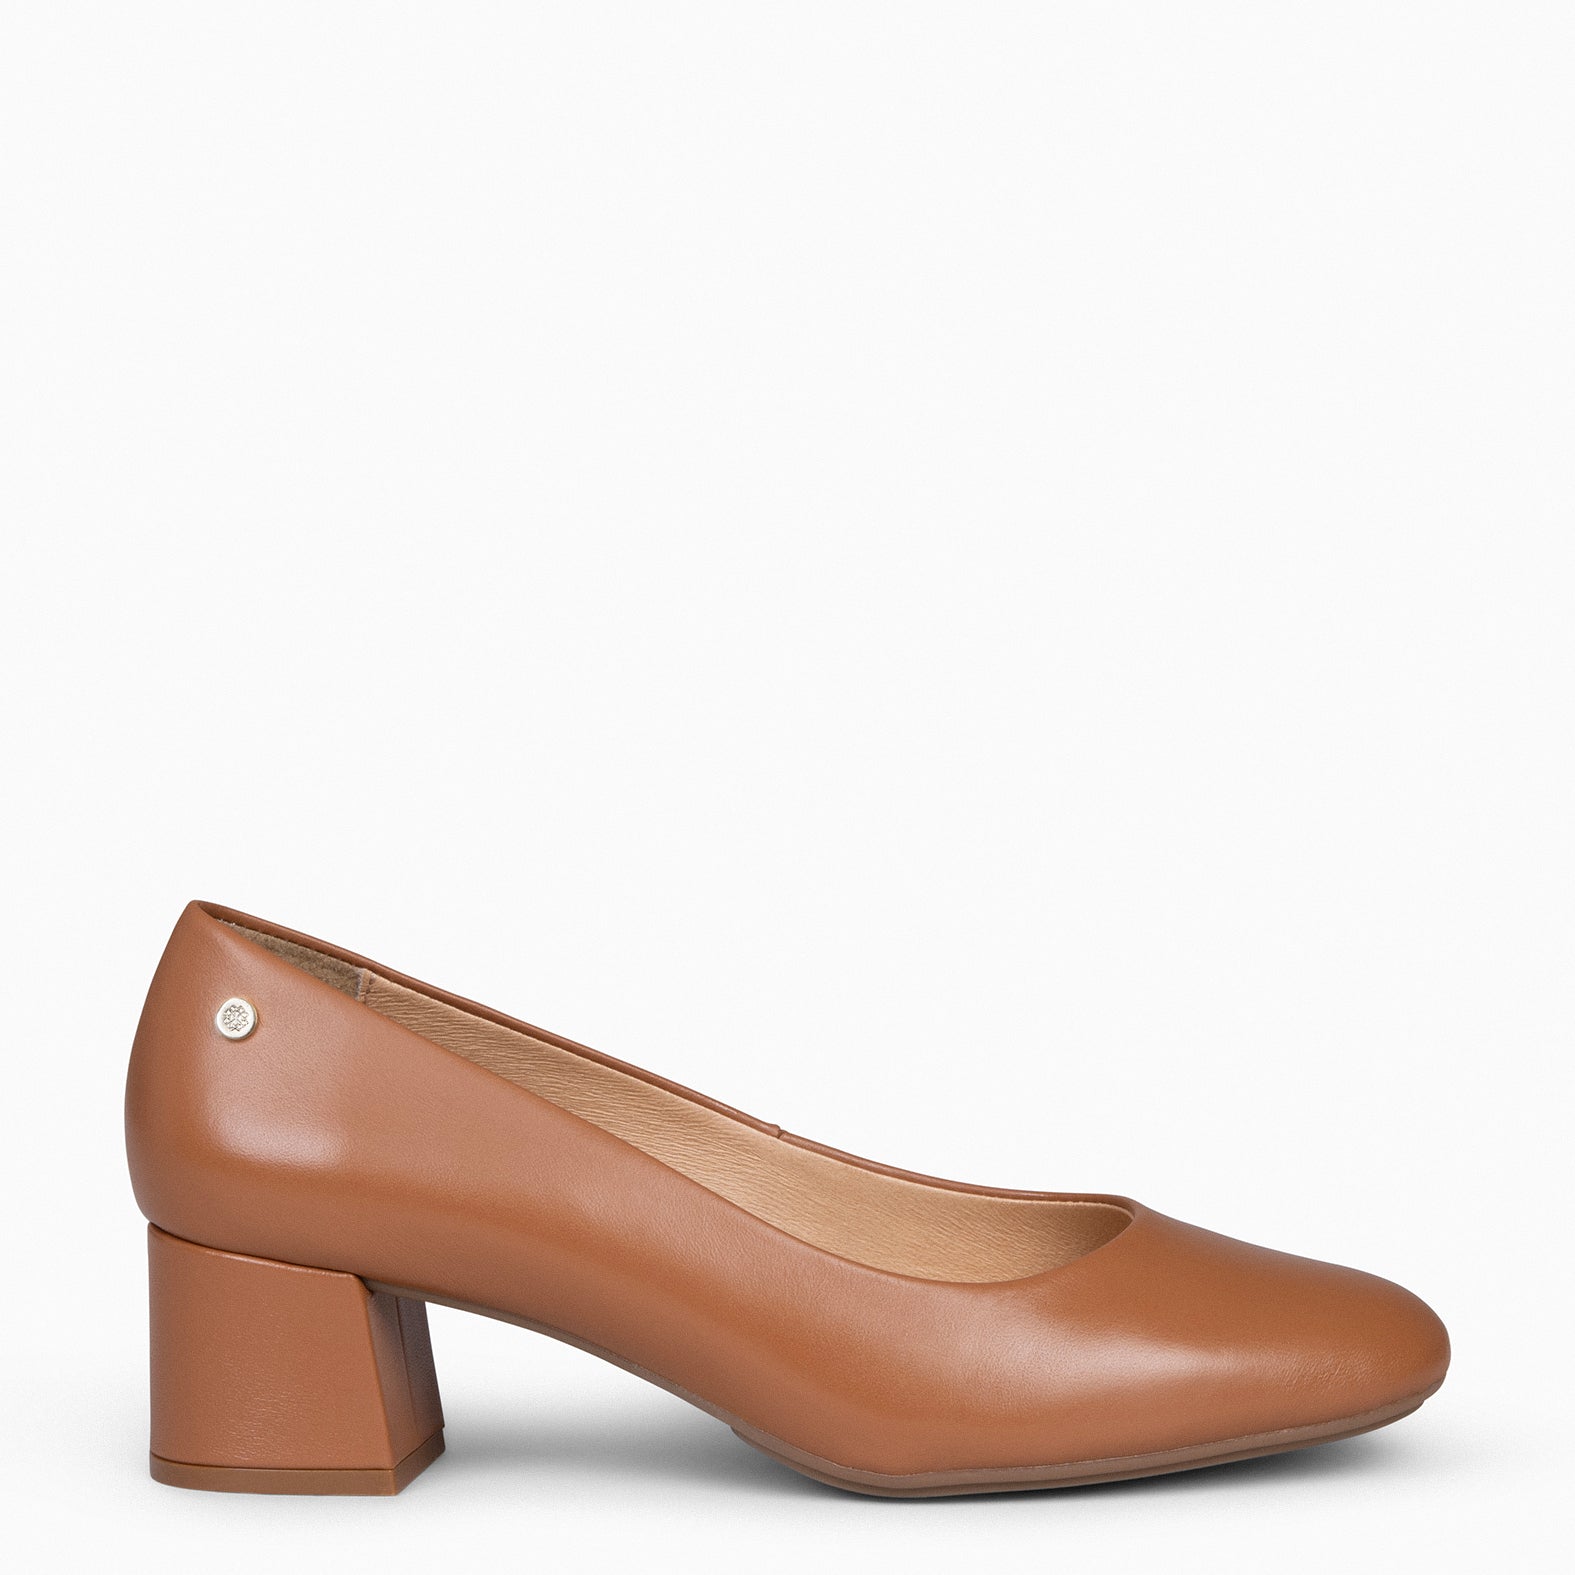 URBAN ROUND – CAMEL nappa leather low heels